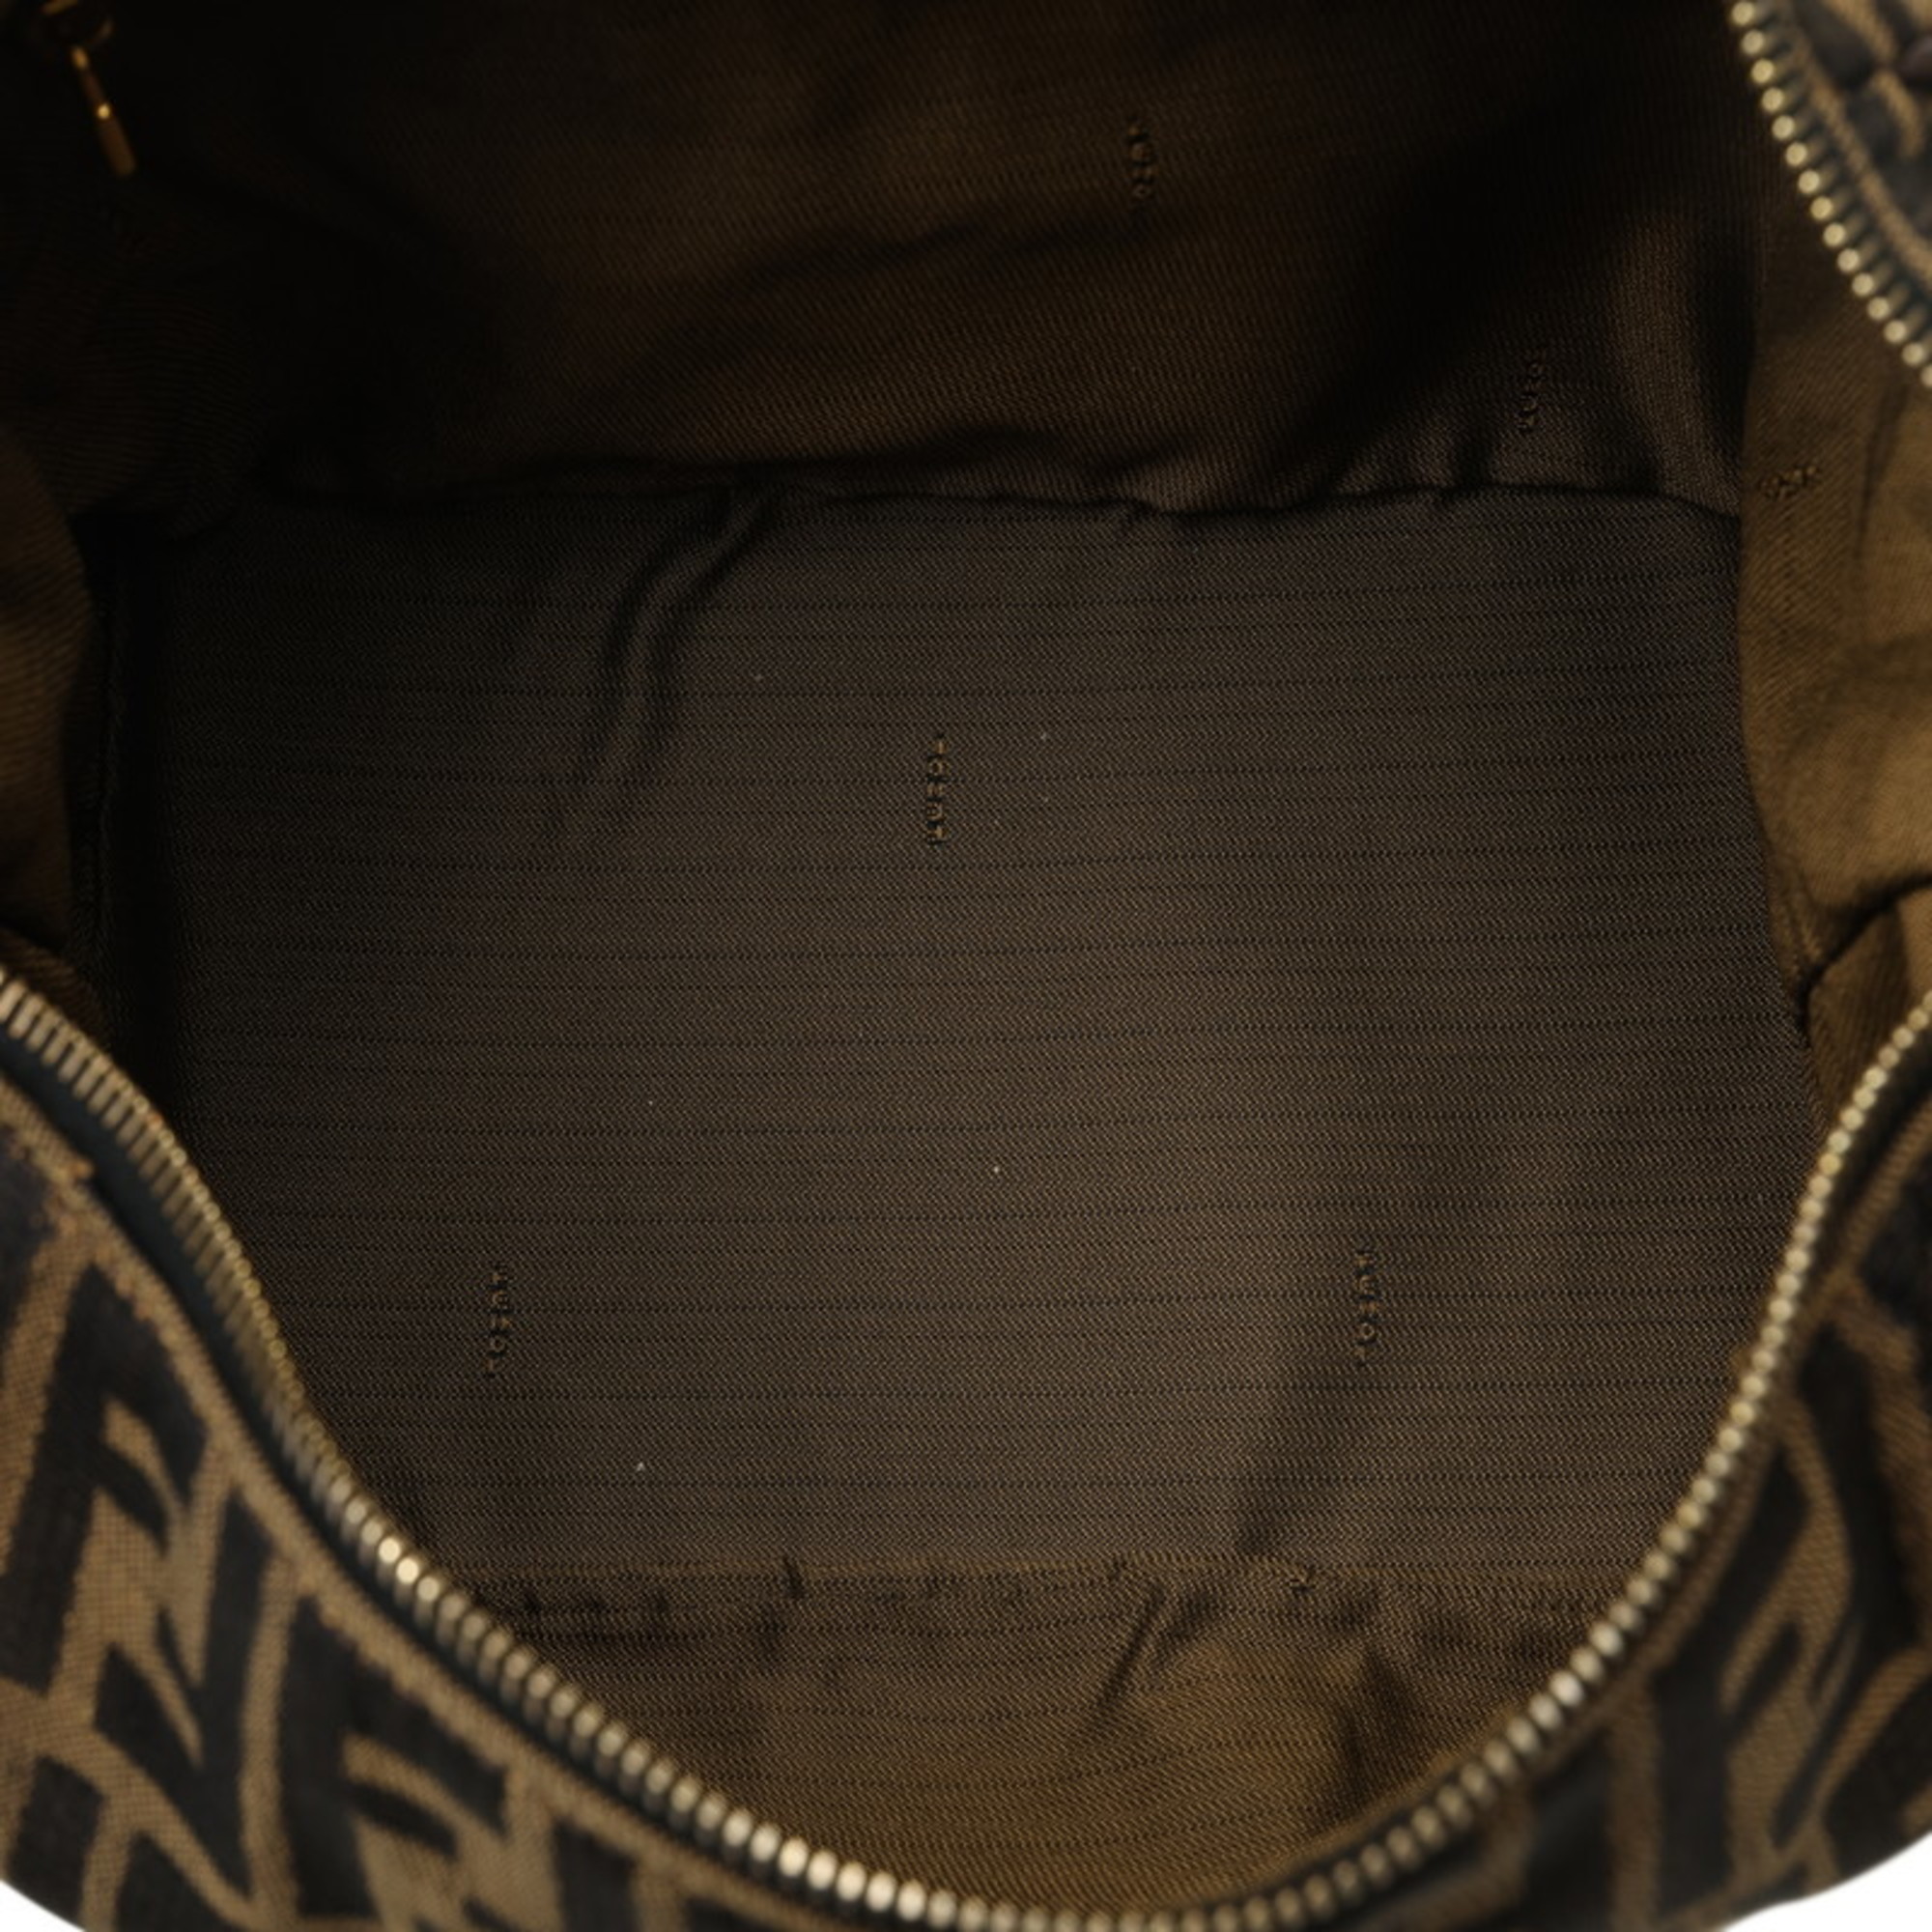 FENDI ZUCCA Handbag Vanity Bag Brown Canvas Leather Women's